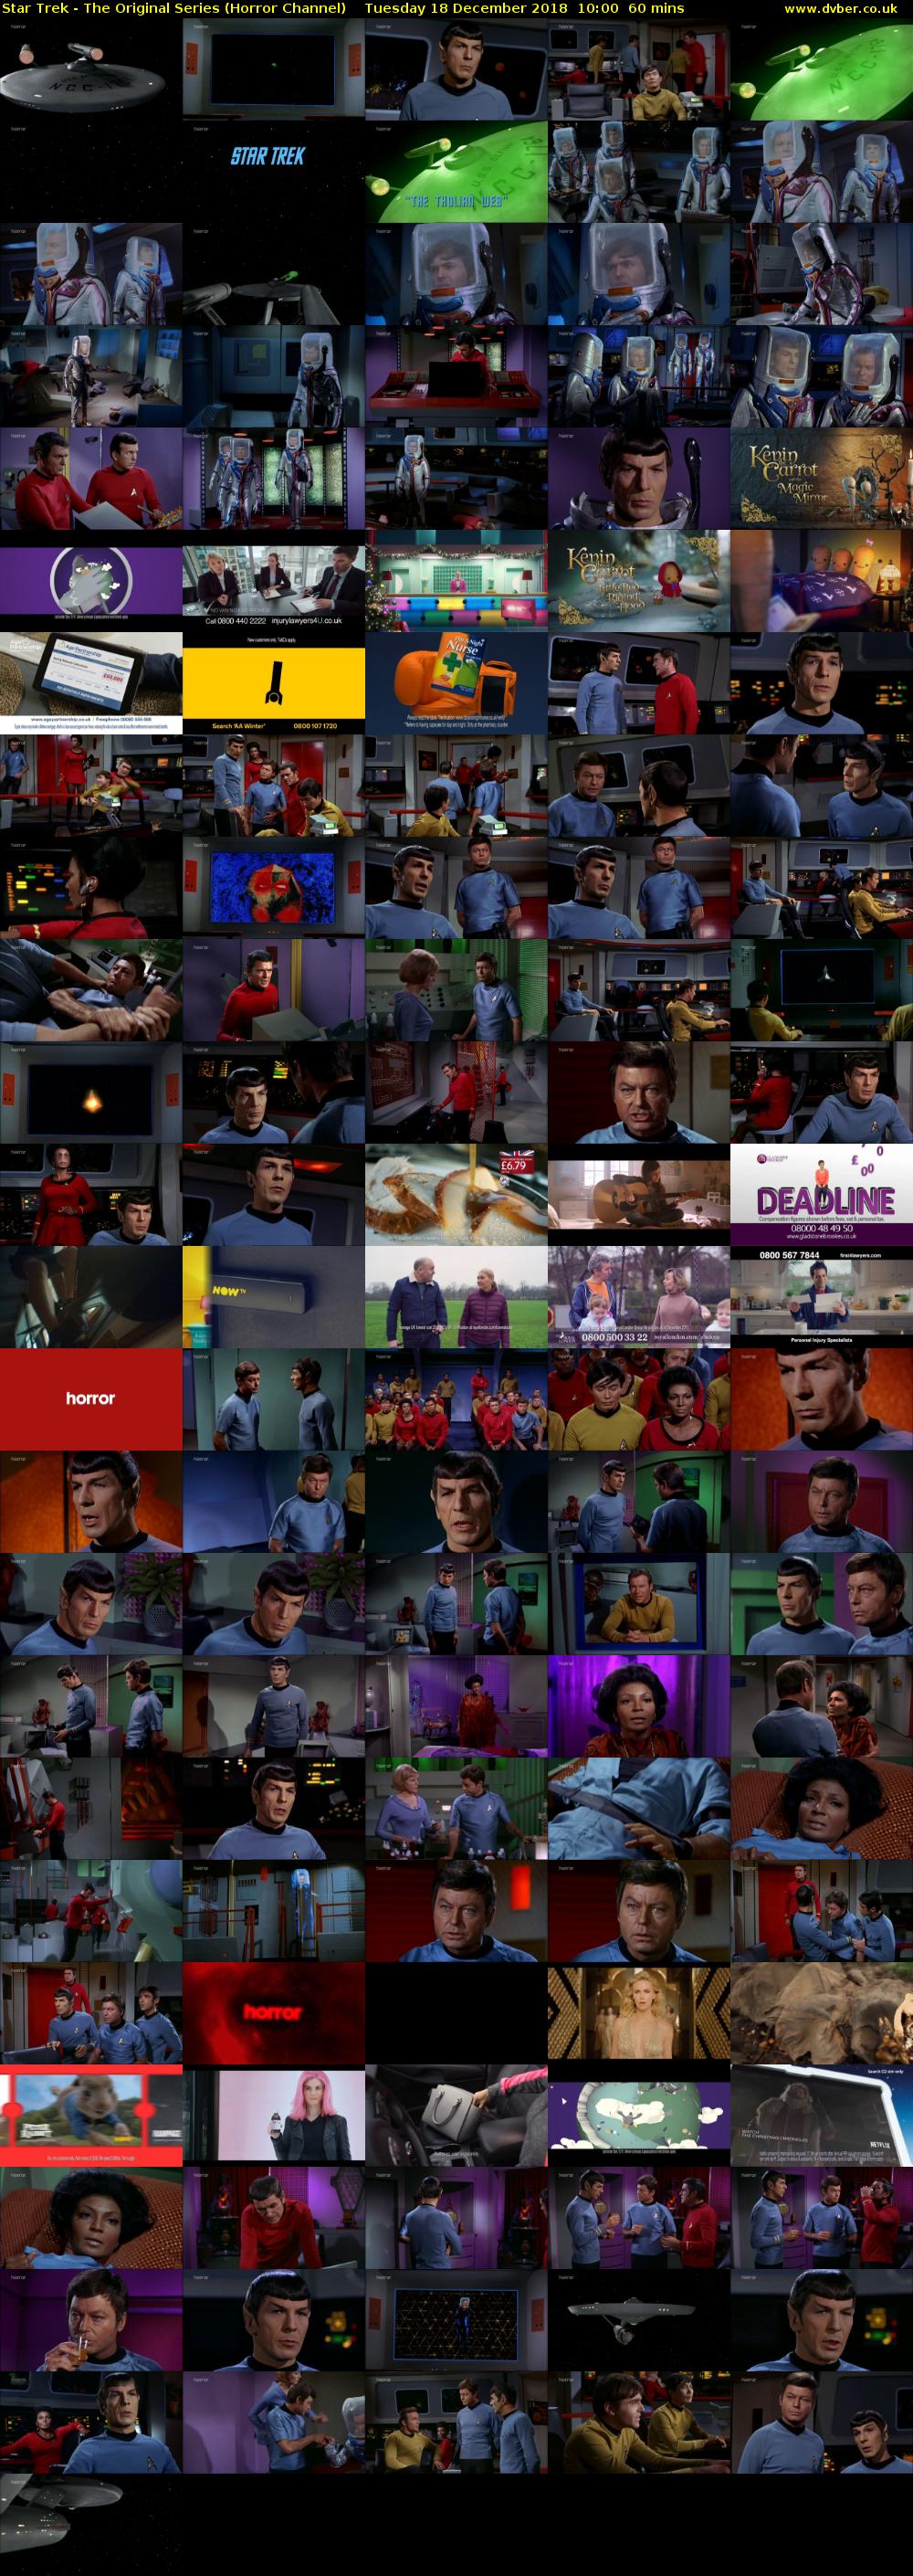 Star Trek - The Original Series (Horror Channel) Tuesday 18 December 2018 10:00 - 11:00